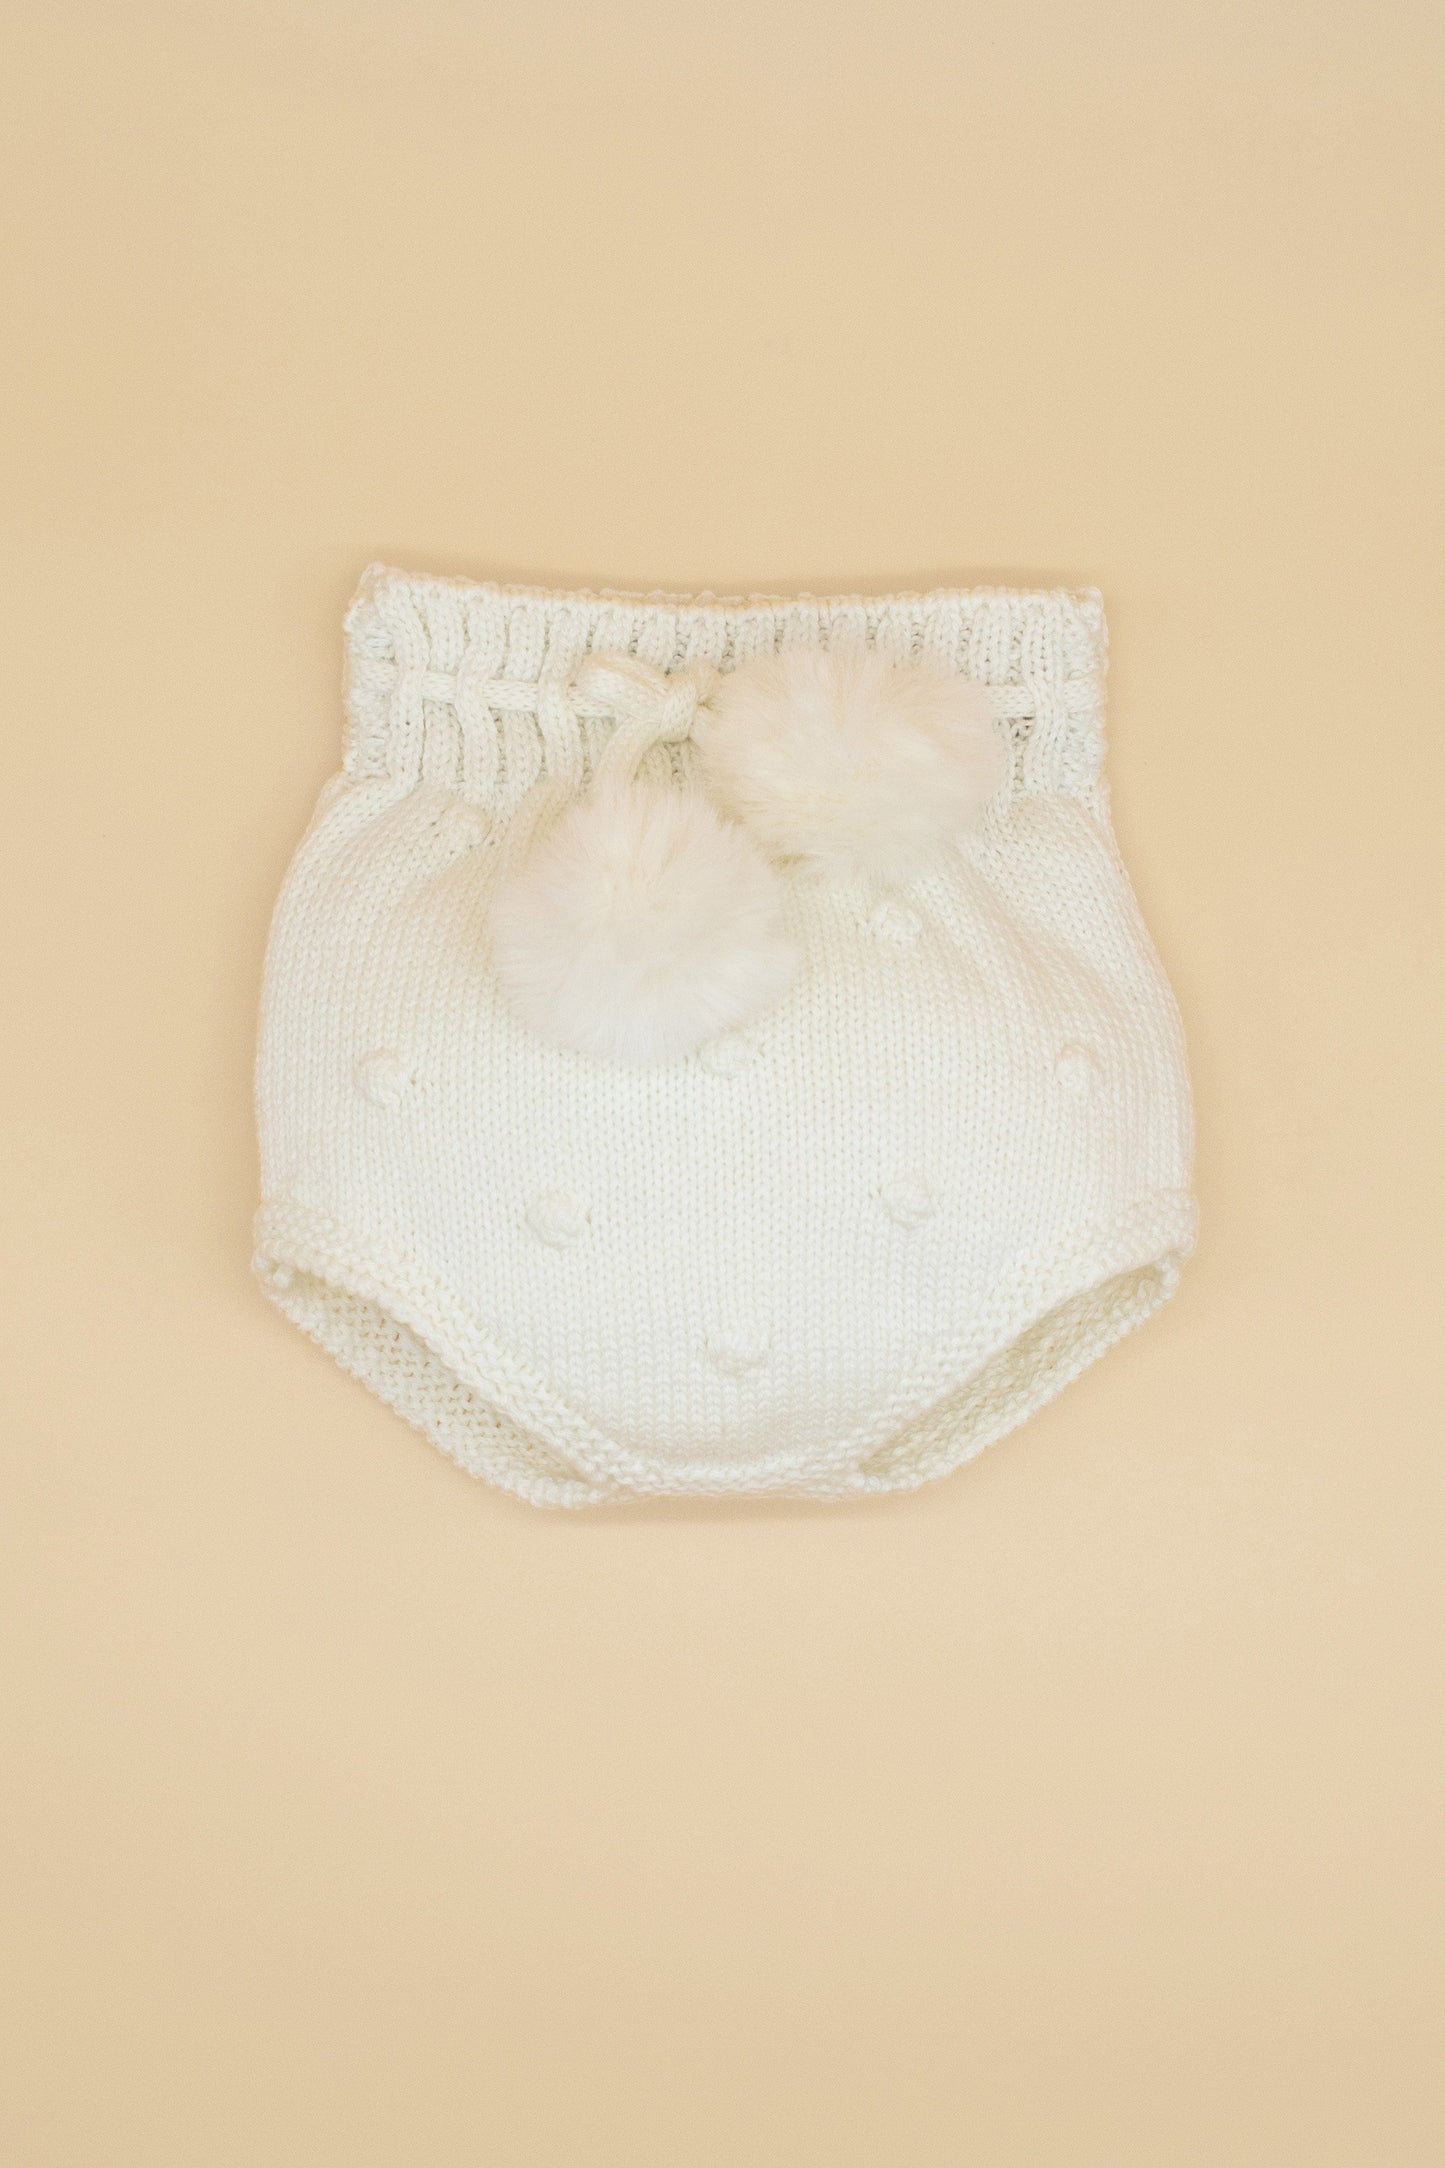 Knit ecri shorts made of merino wool